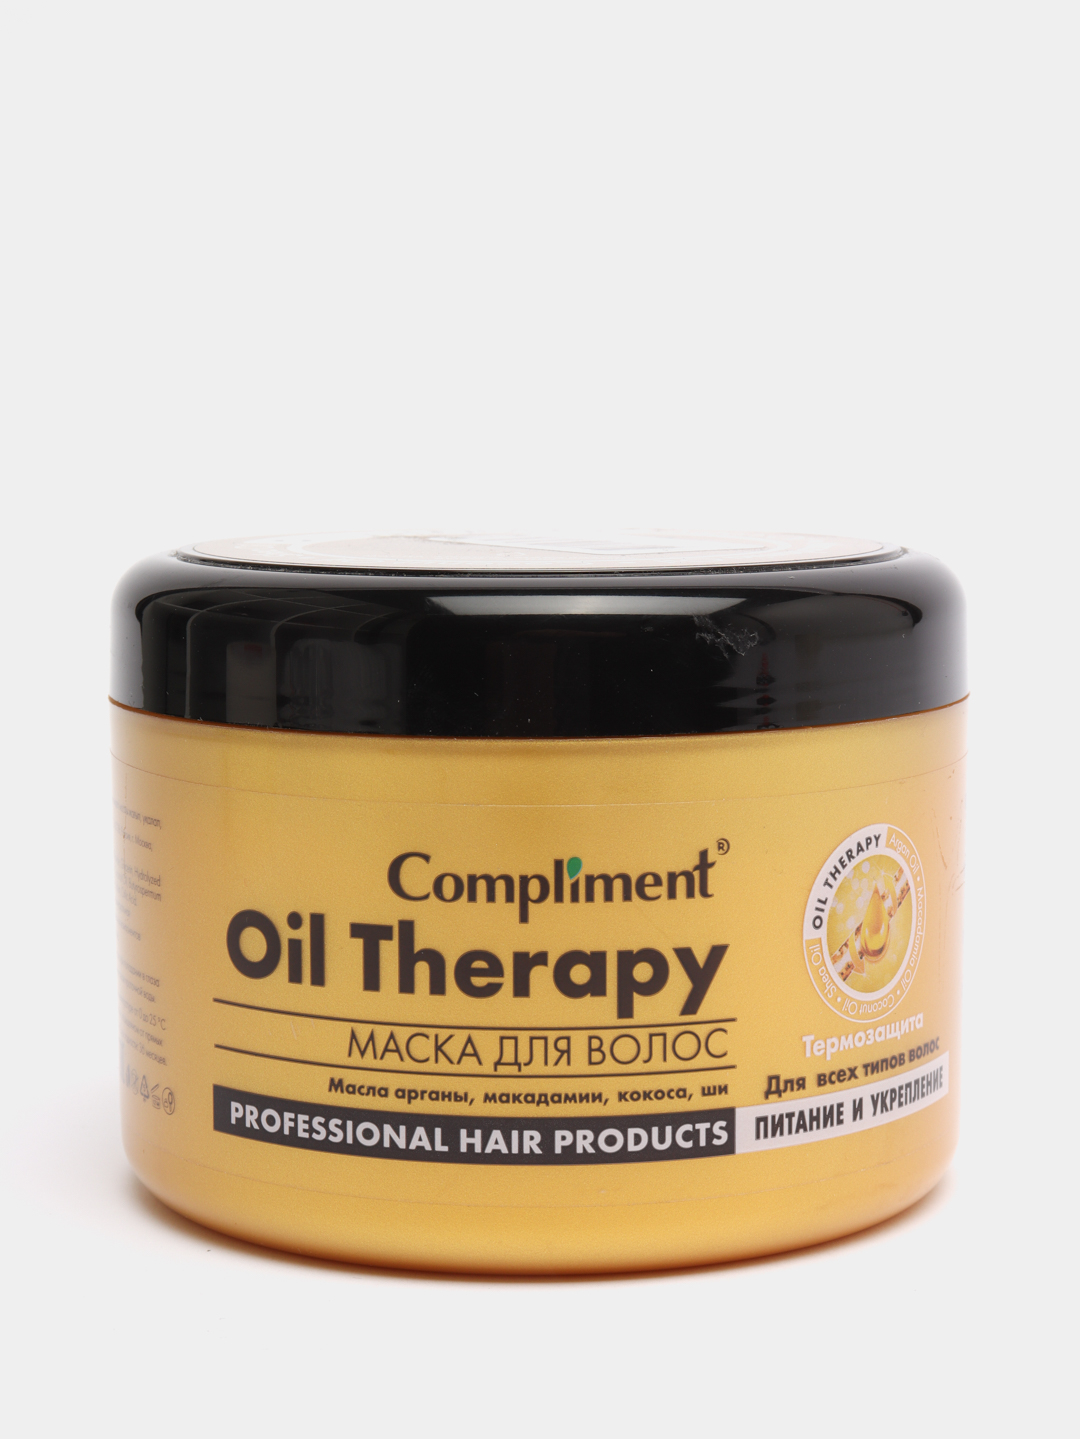 Therapy масло для волос. Маска для волос комплимент Oil Therapy. Compliment Oil Therapy. Комплимент Ойл терапи маска.